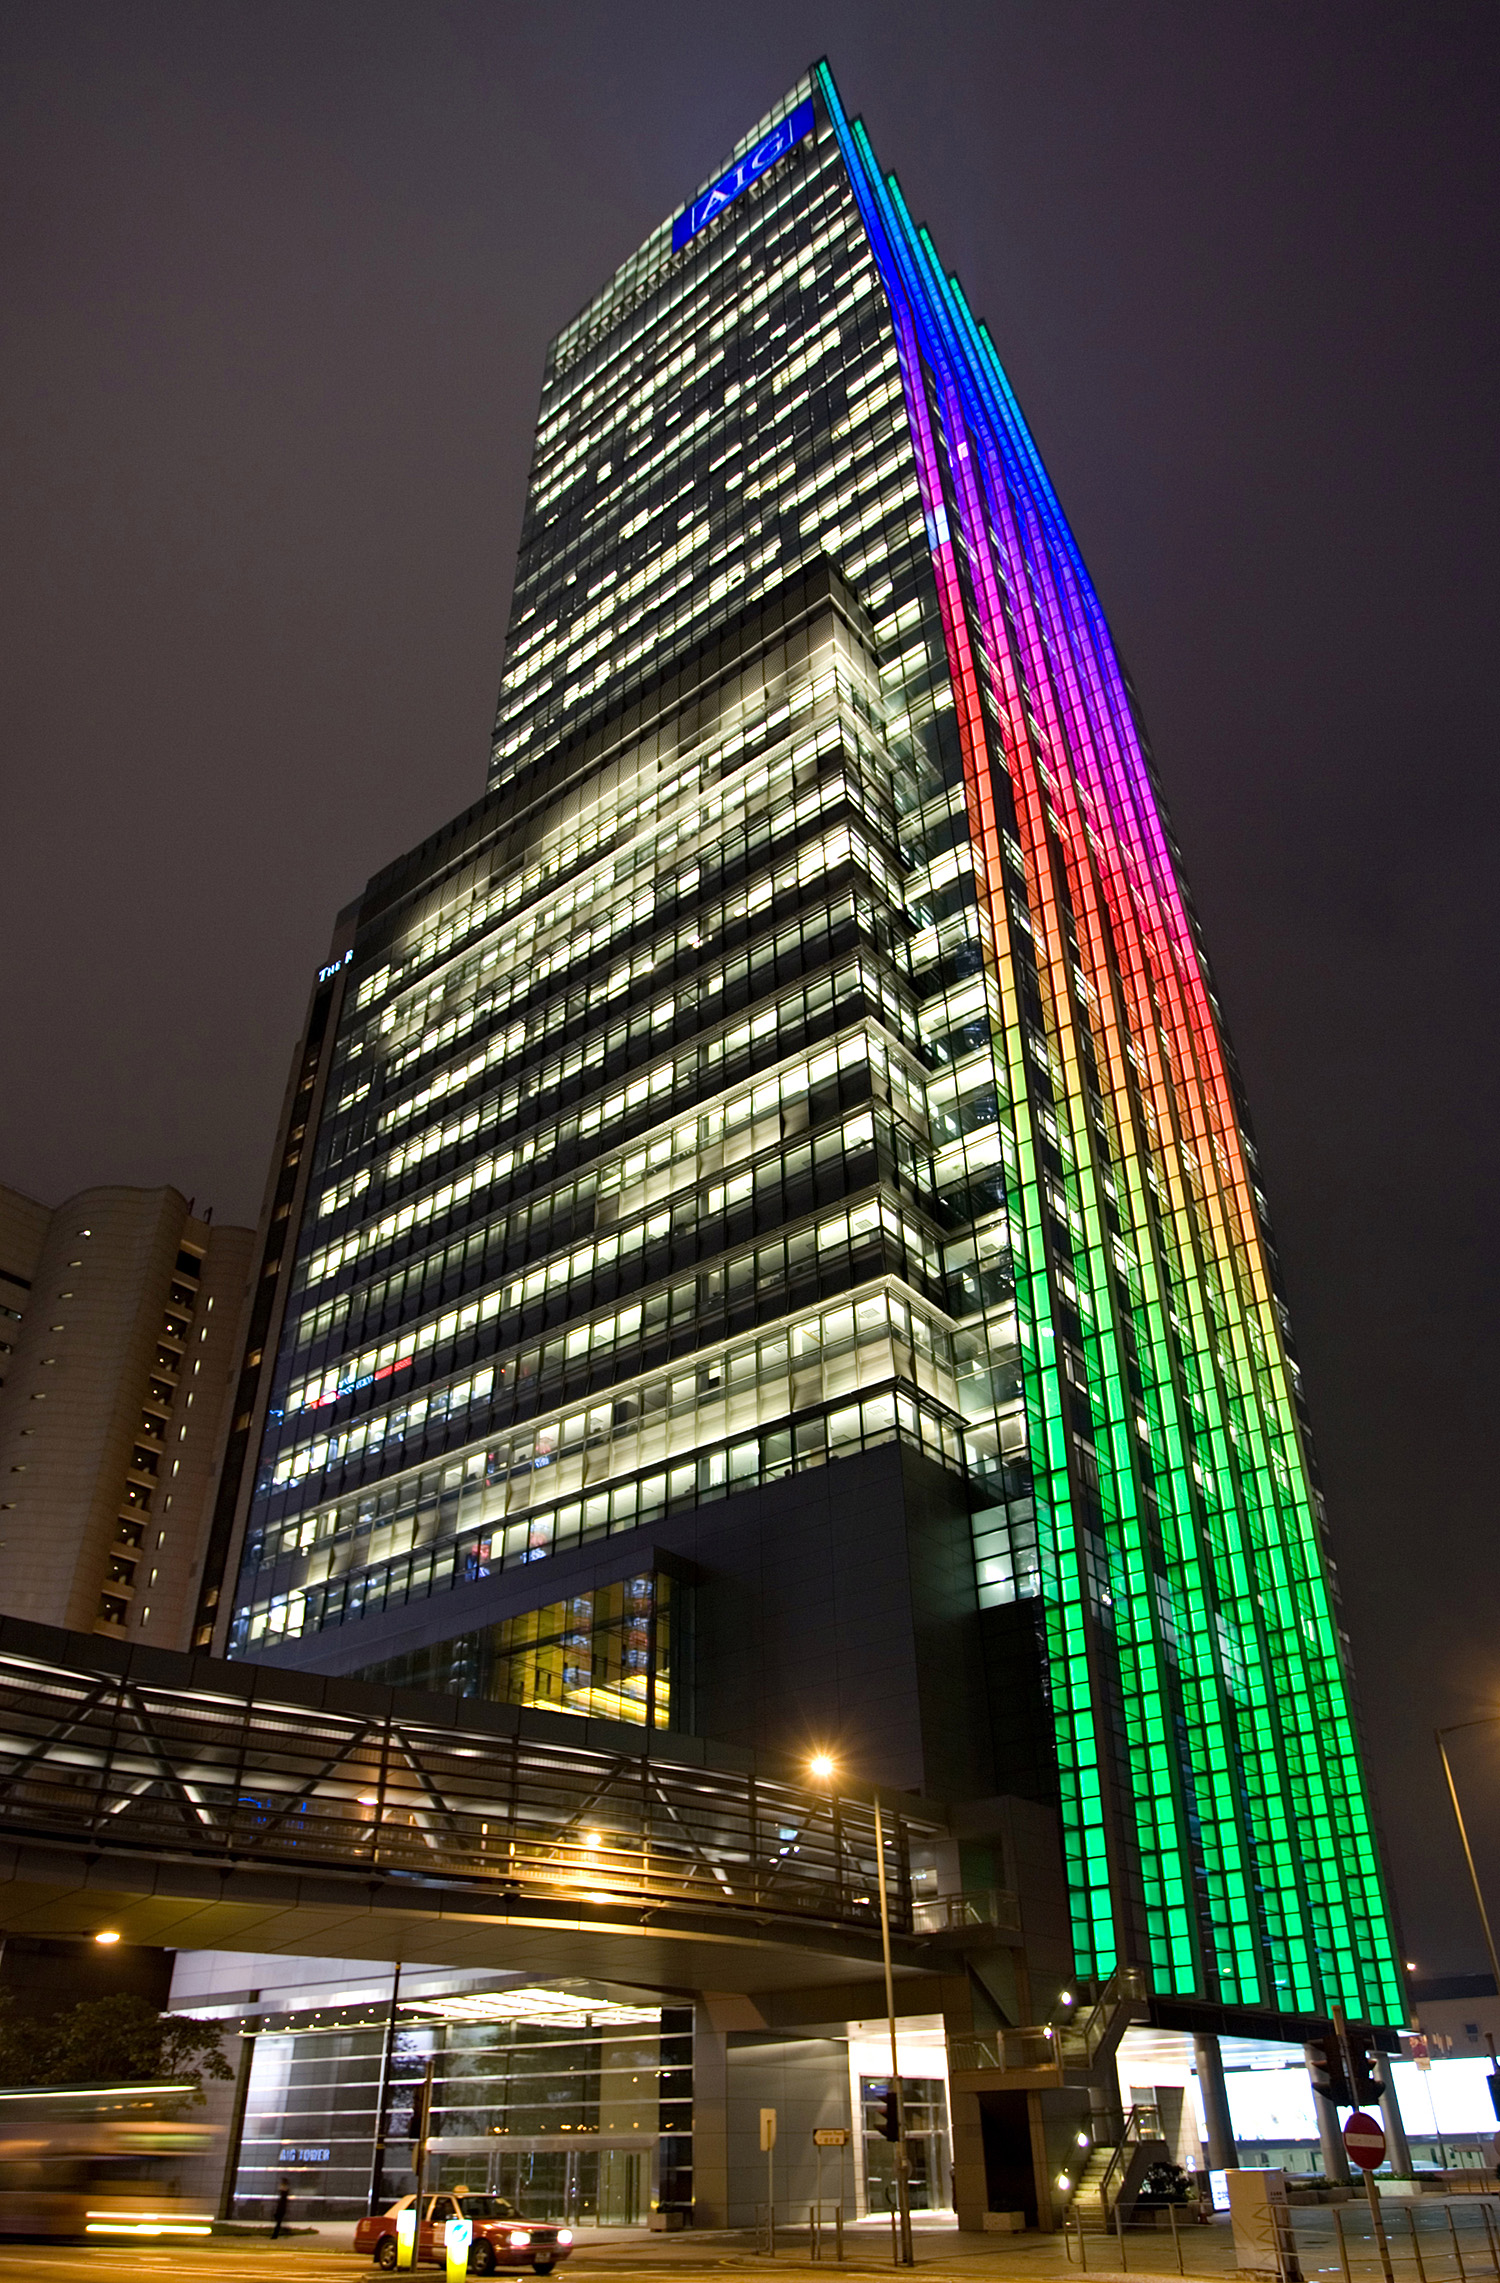 AIA Central, Hong Kong - Illumination. © Mathias Beinling